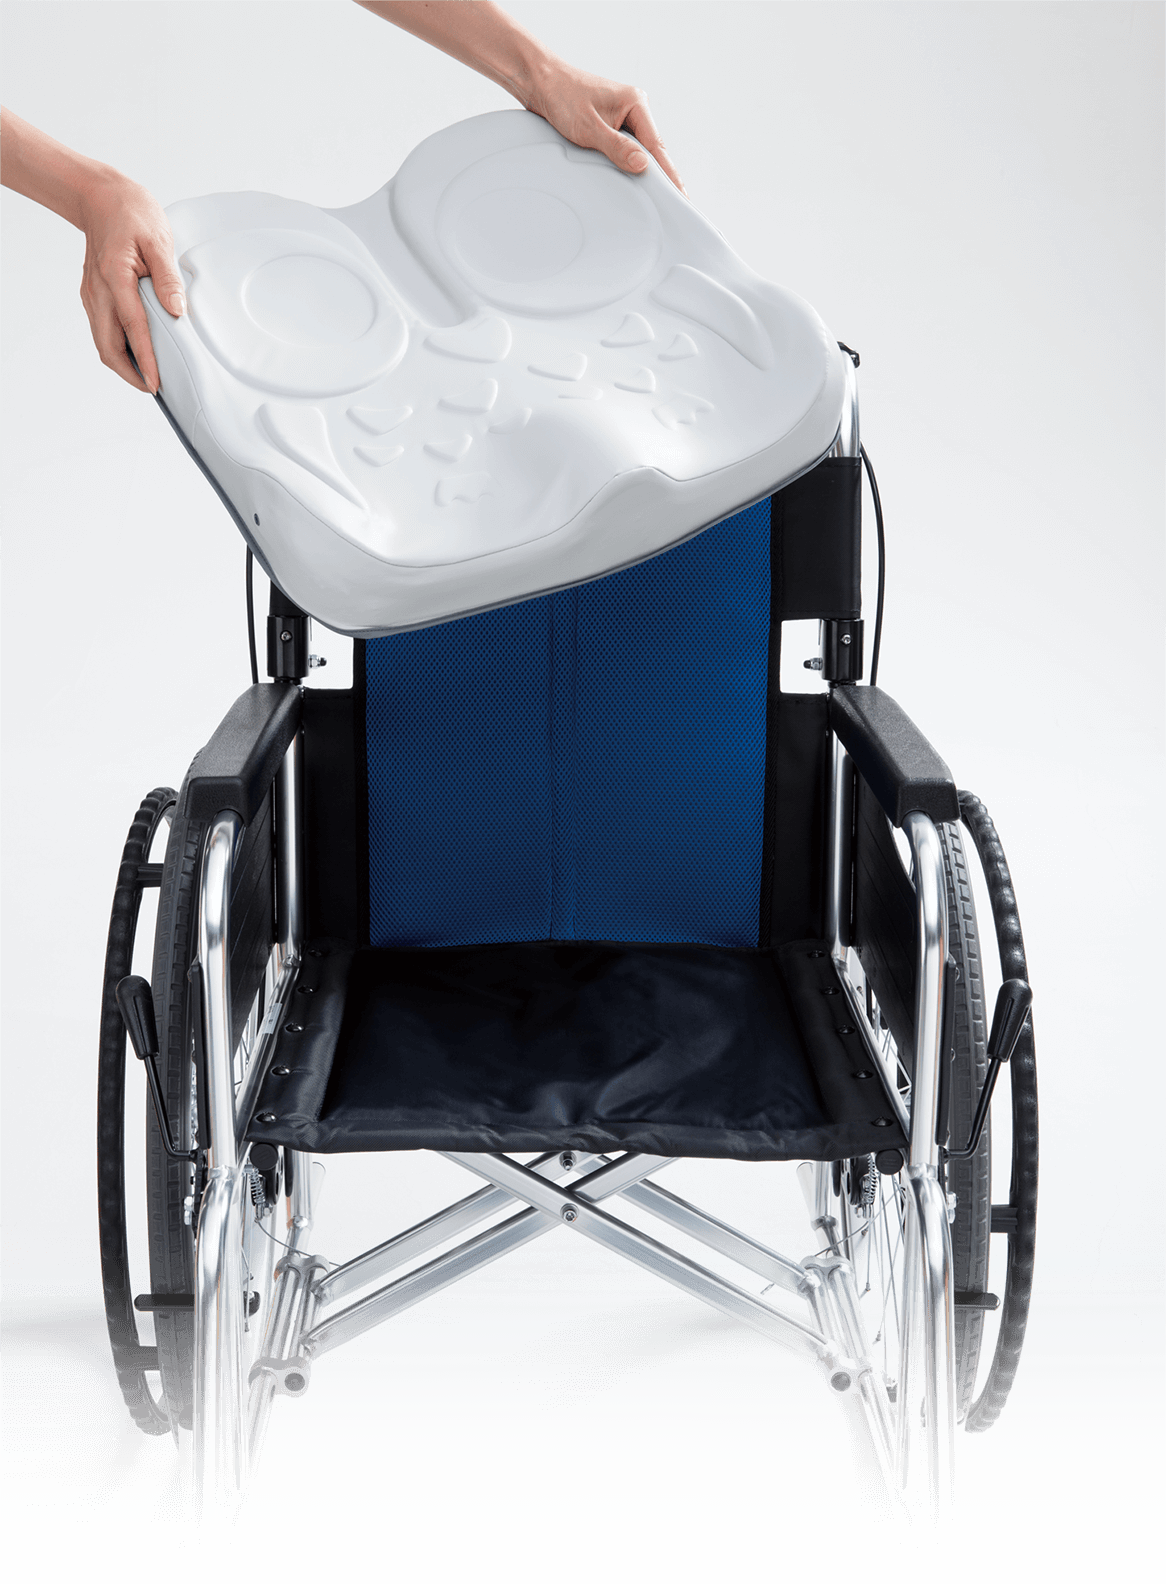 EXGEL特級舒適坐墊系列貓頭鷹厚度輪椅座墊